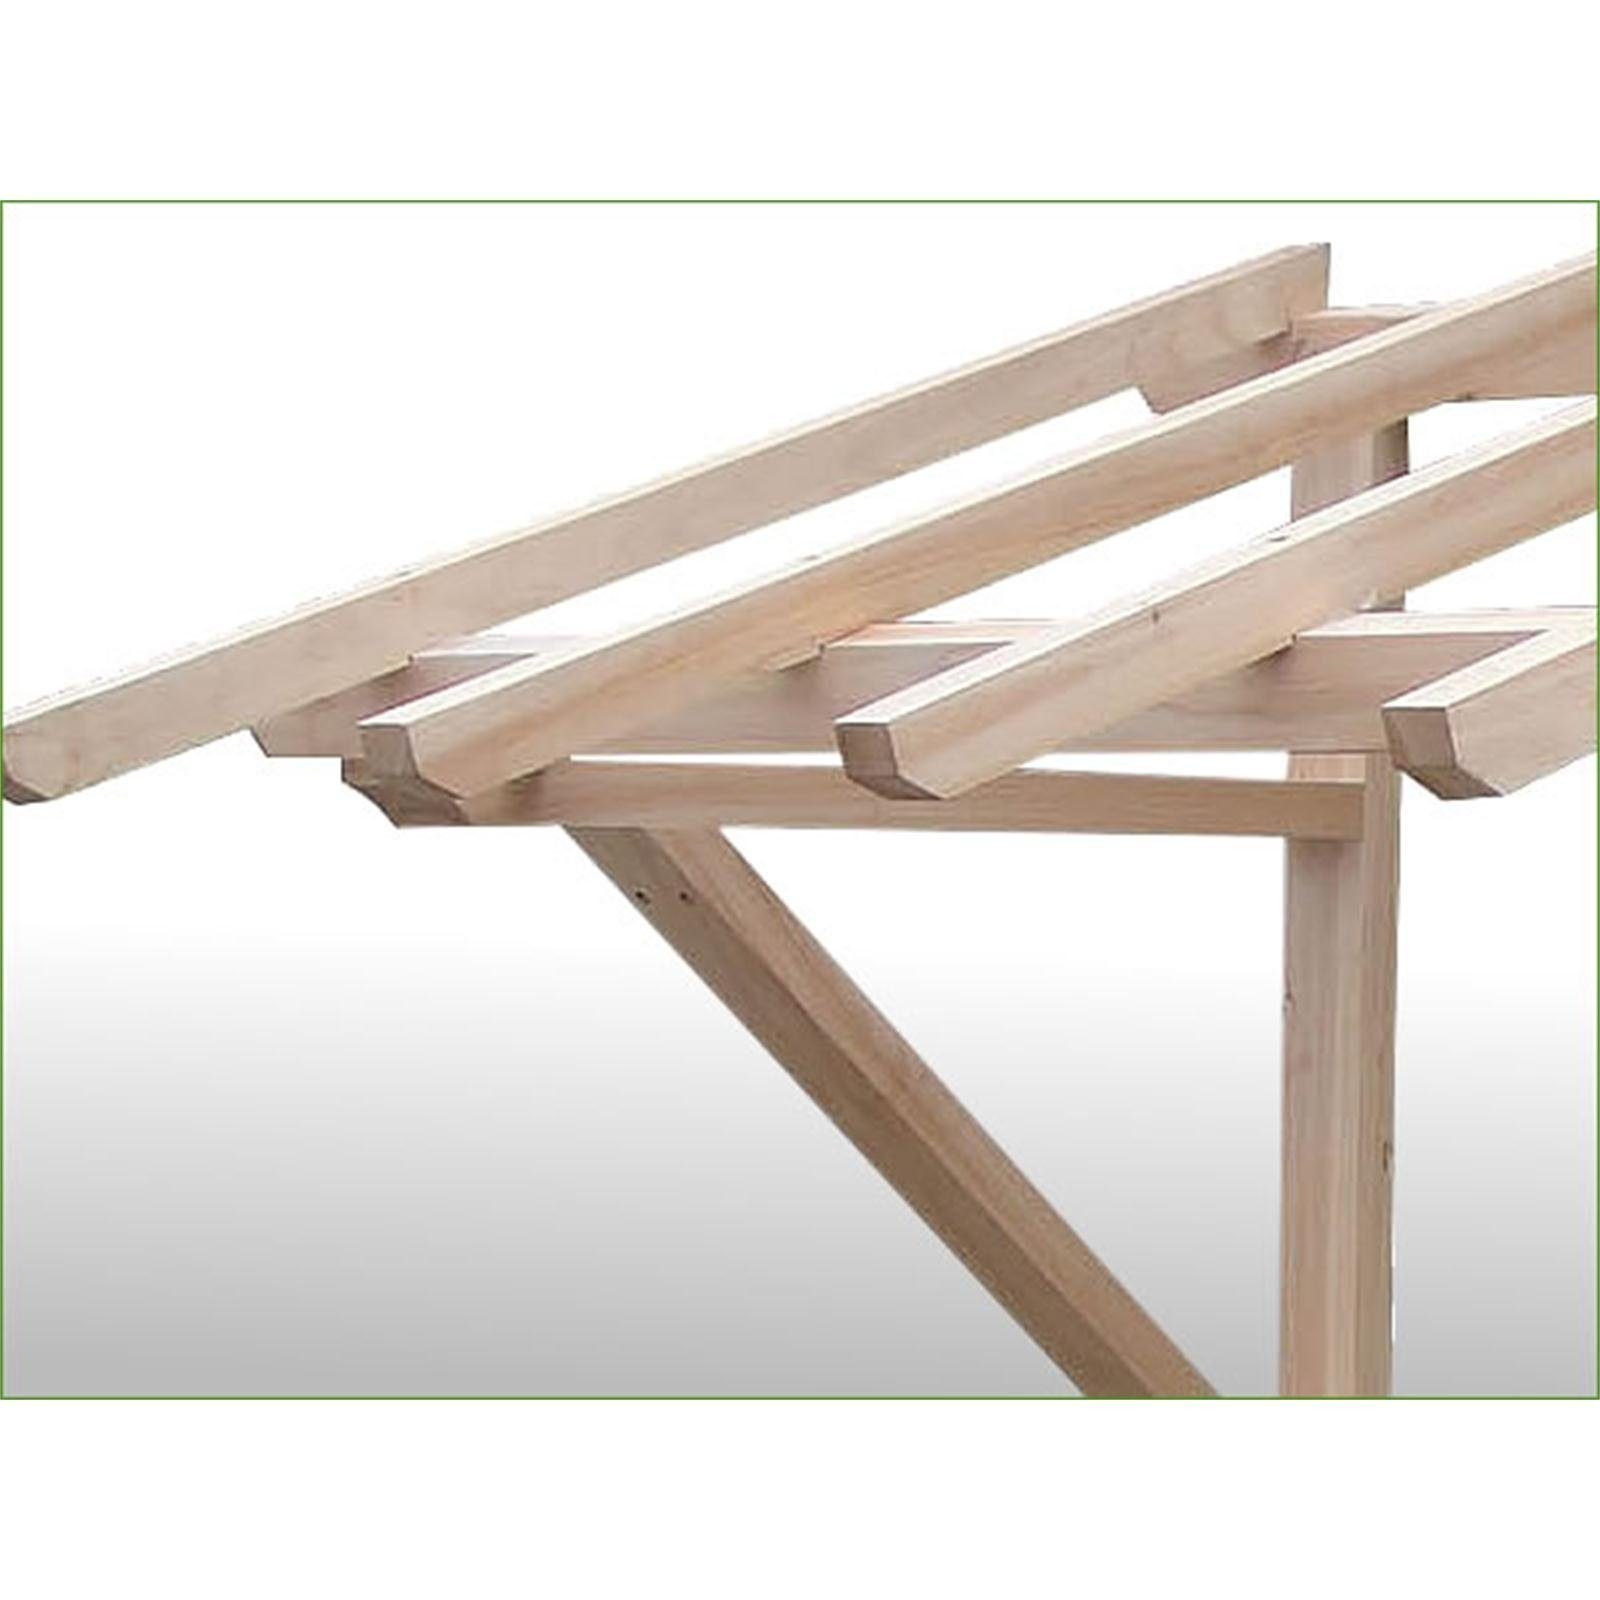 Melko Pultvordach Haustürvordach Holz Unbehandelt mm Pultvordach Türdach 205 cm Überdachung (Stück), aus 2050 NEU